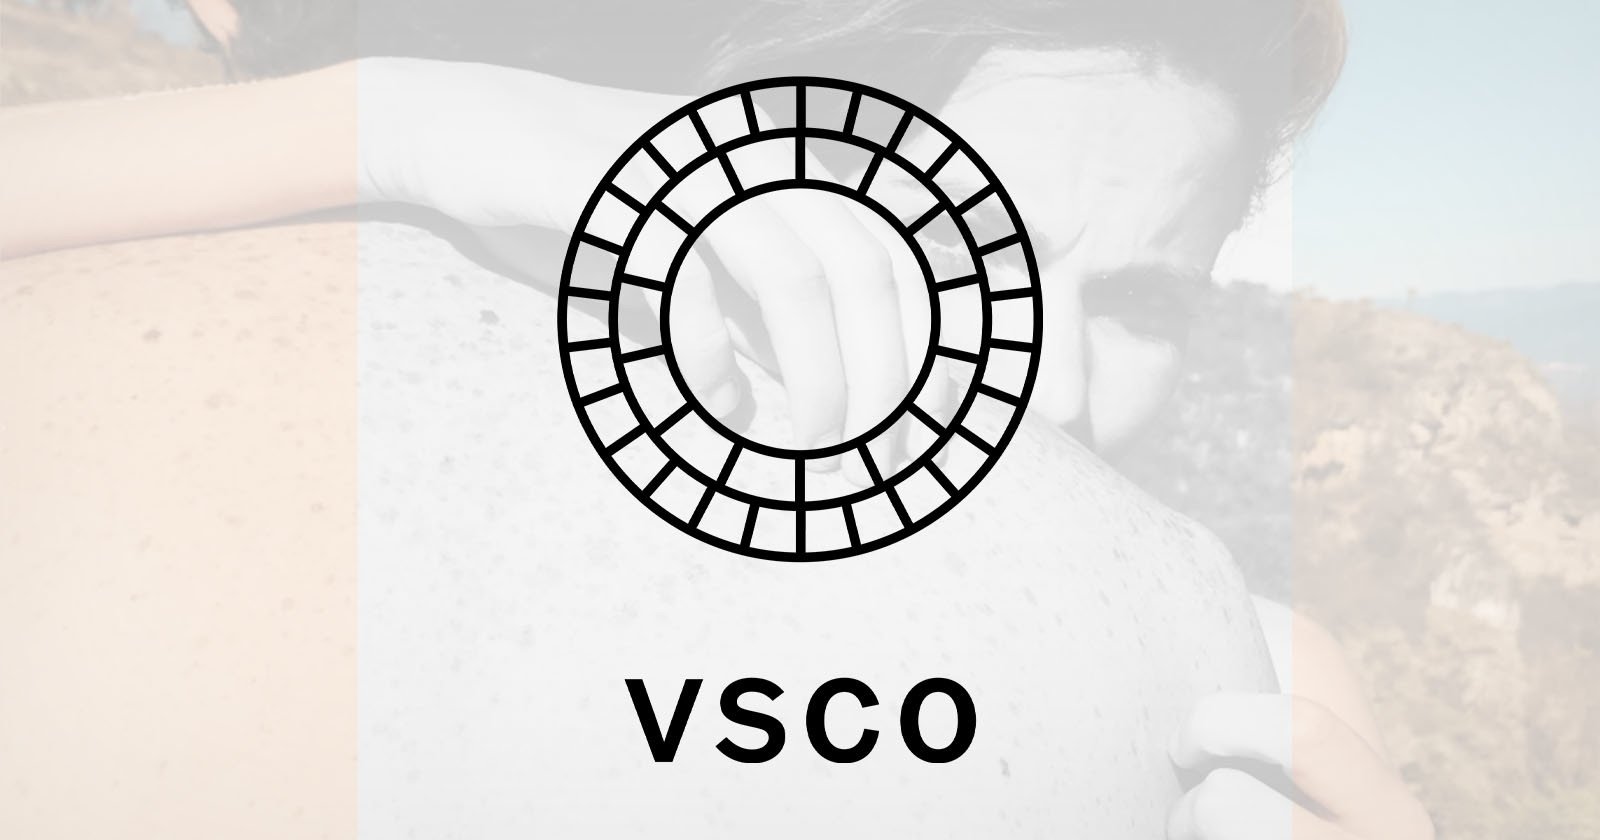  vsco relaunches focus serving more serious creatives 